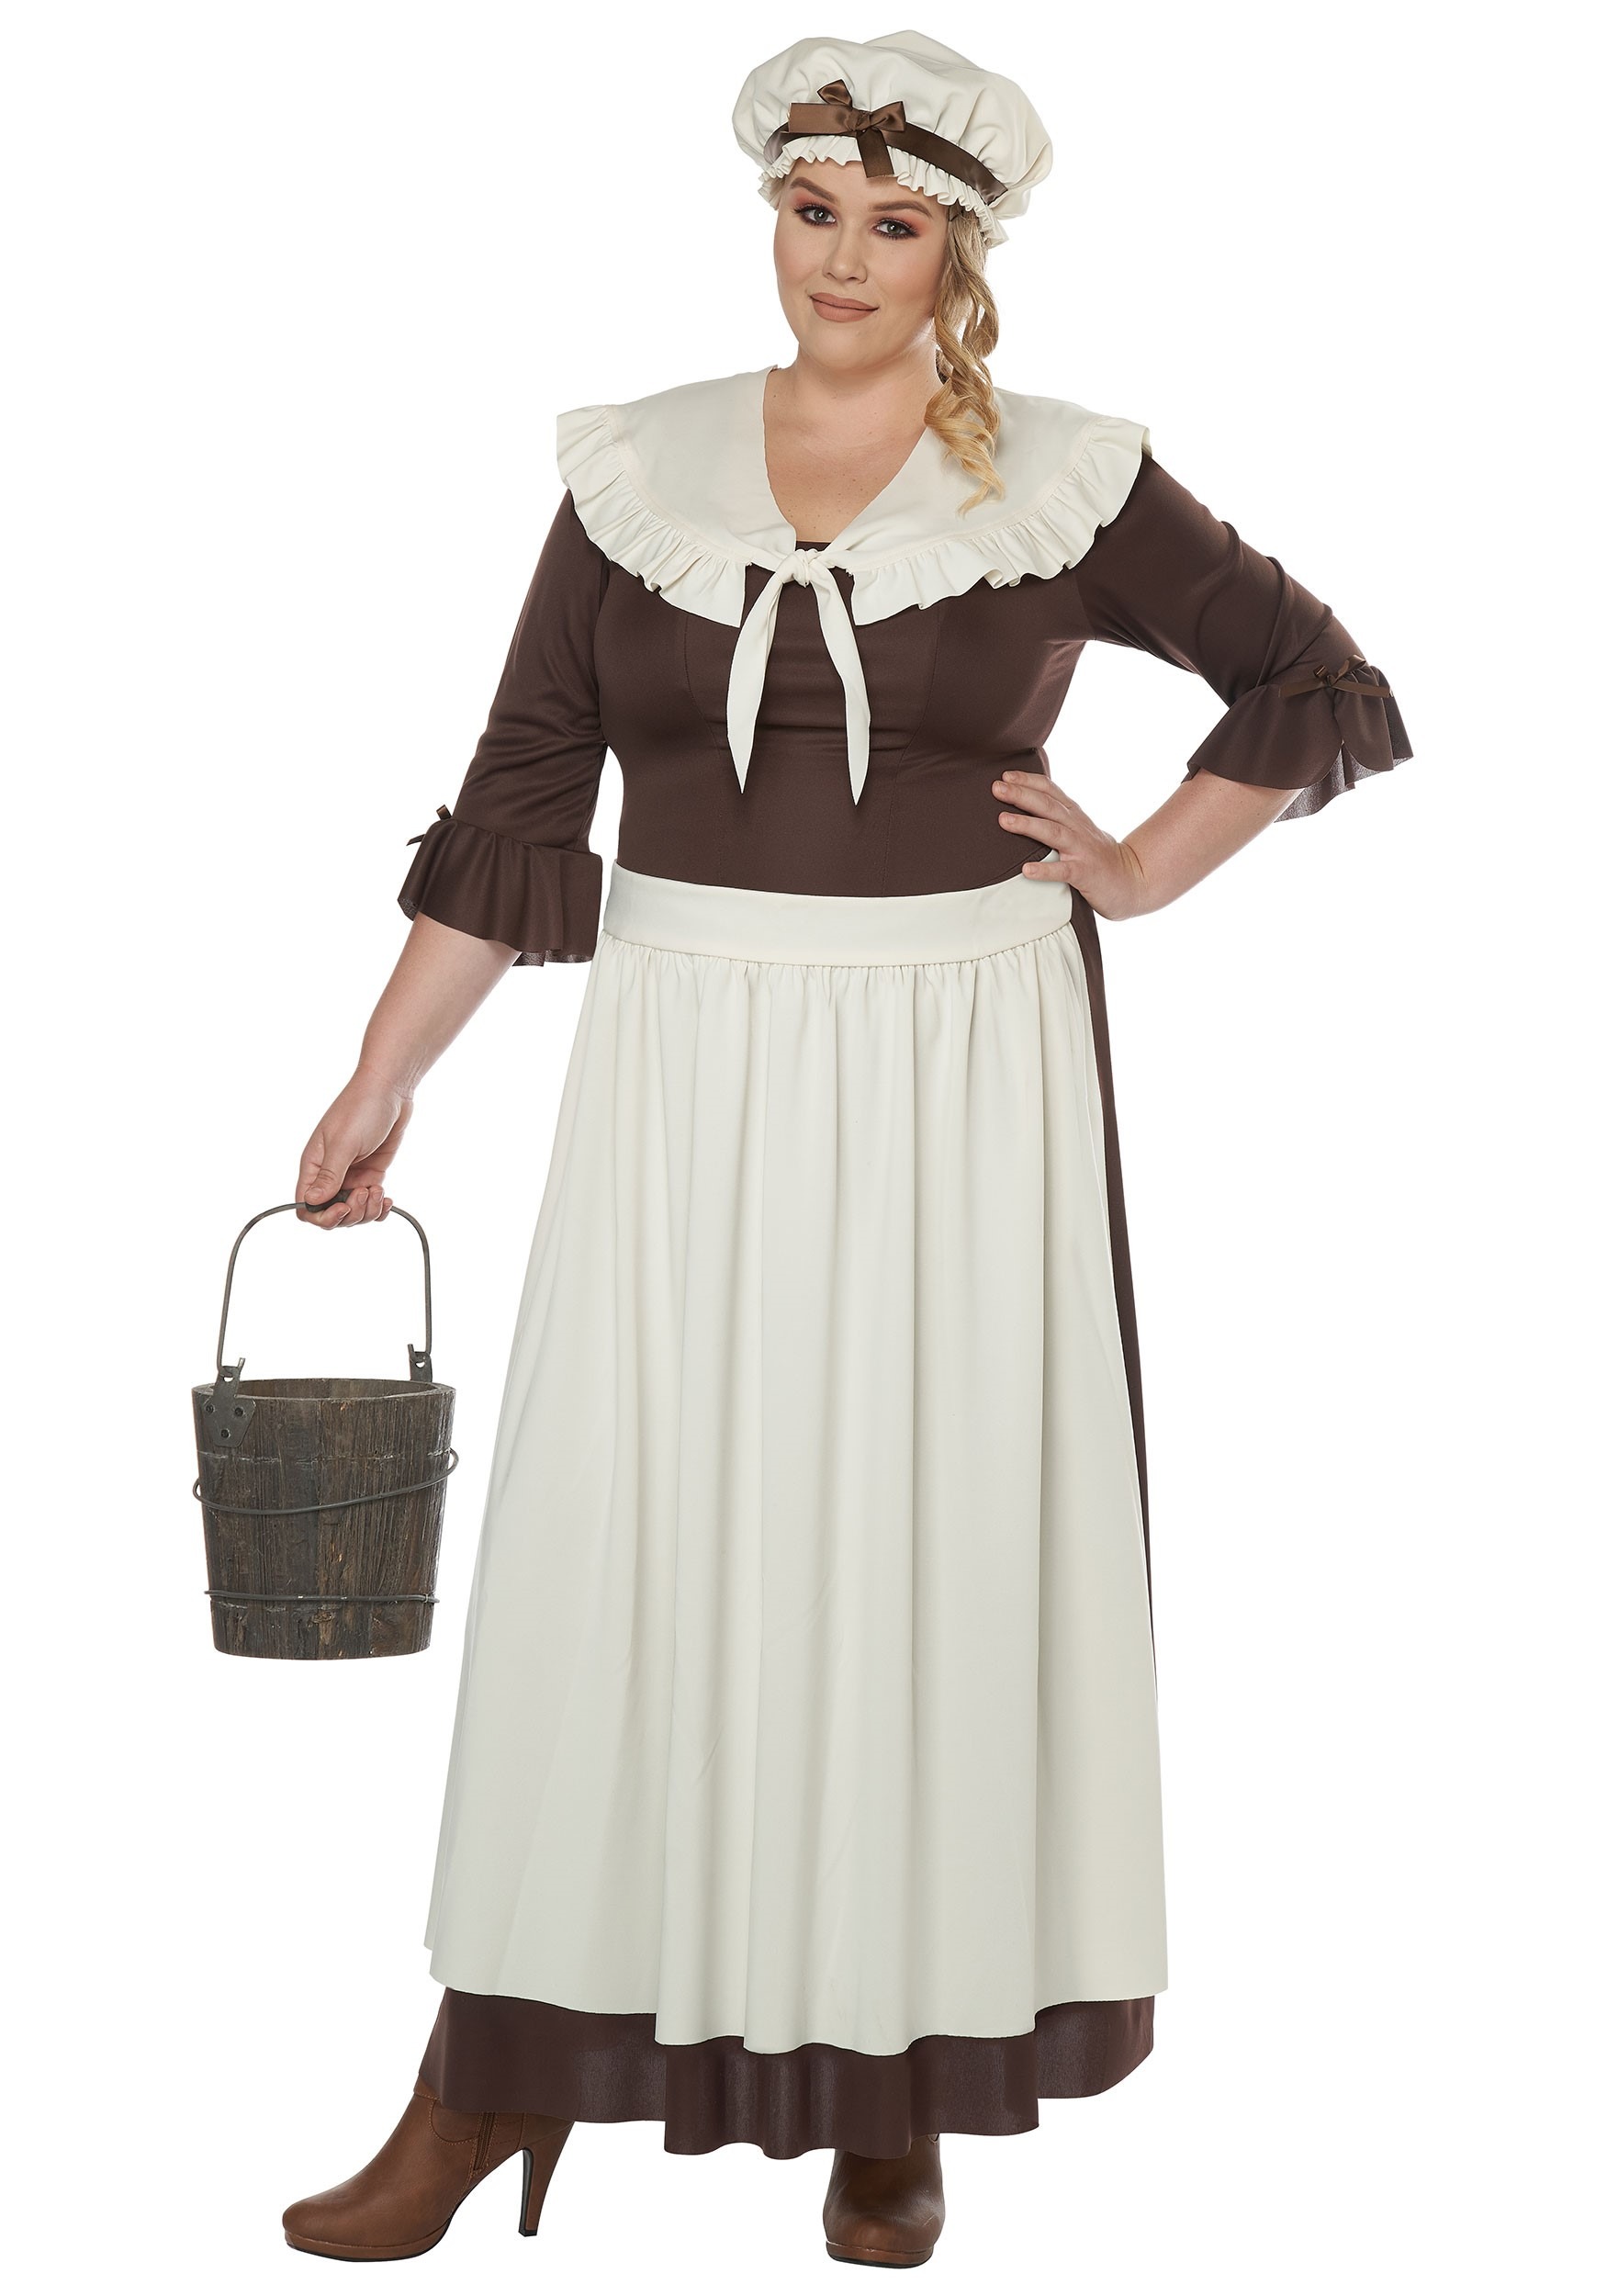 Photos - Fancy Dress California Costume Collection Plus Size Colonial Village Woman Costume Bro 